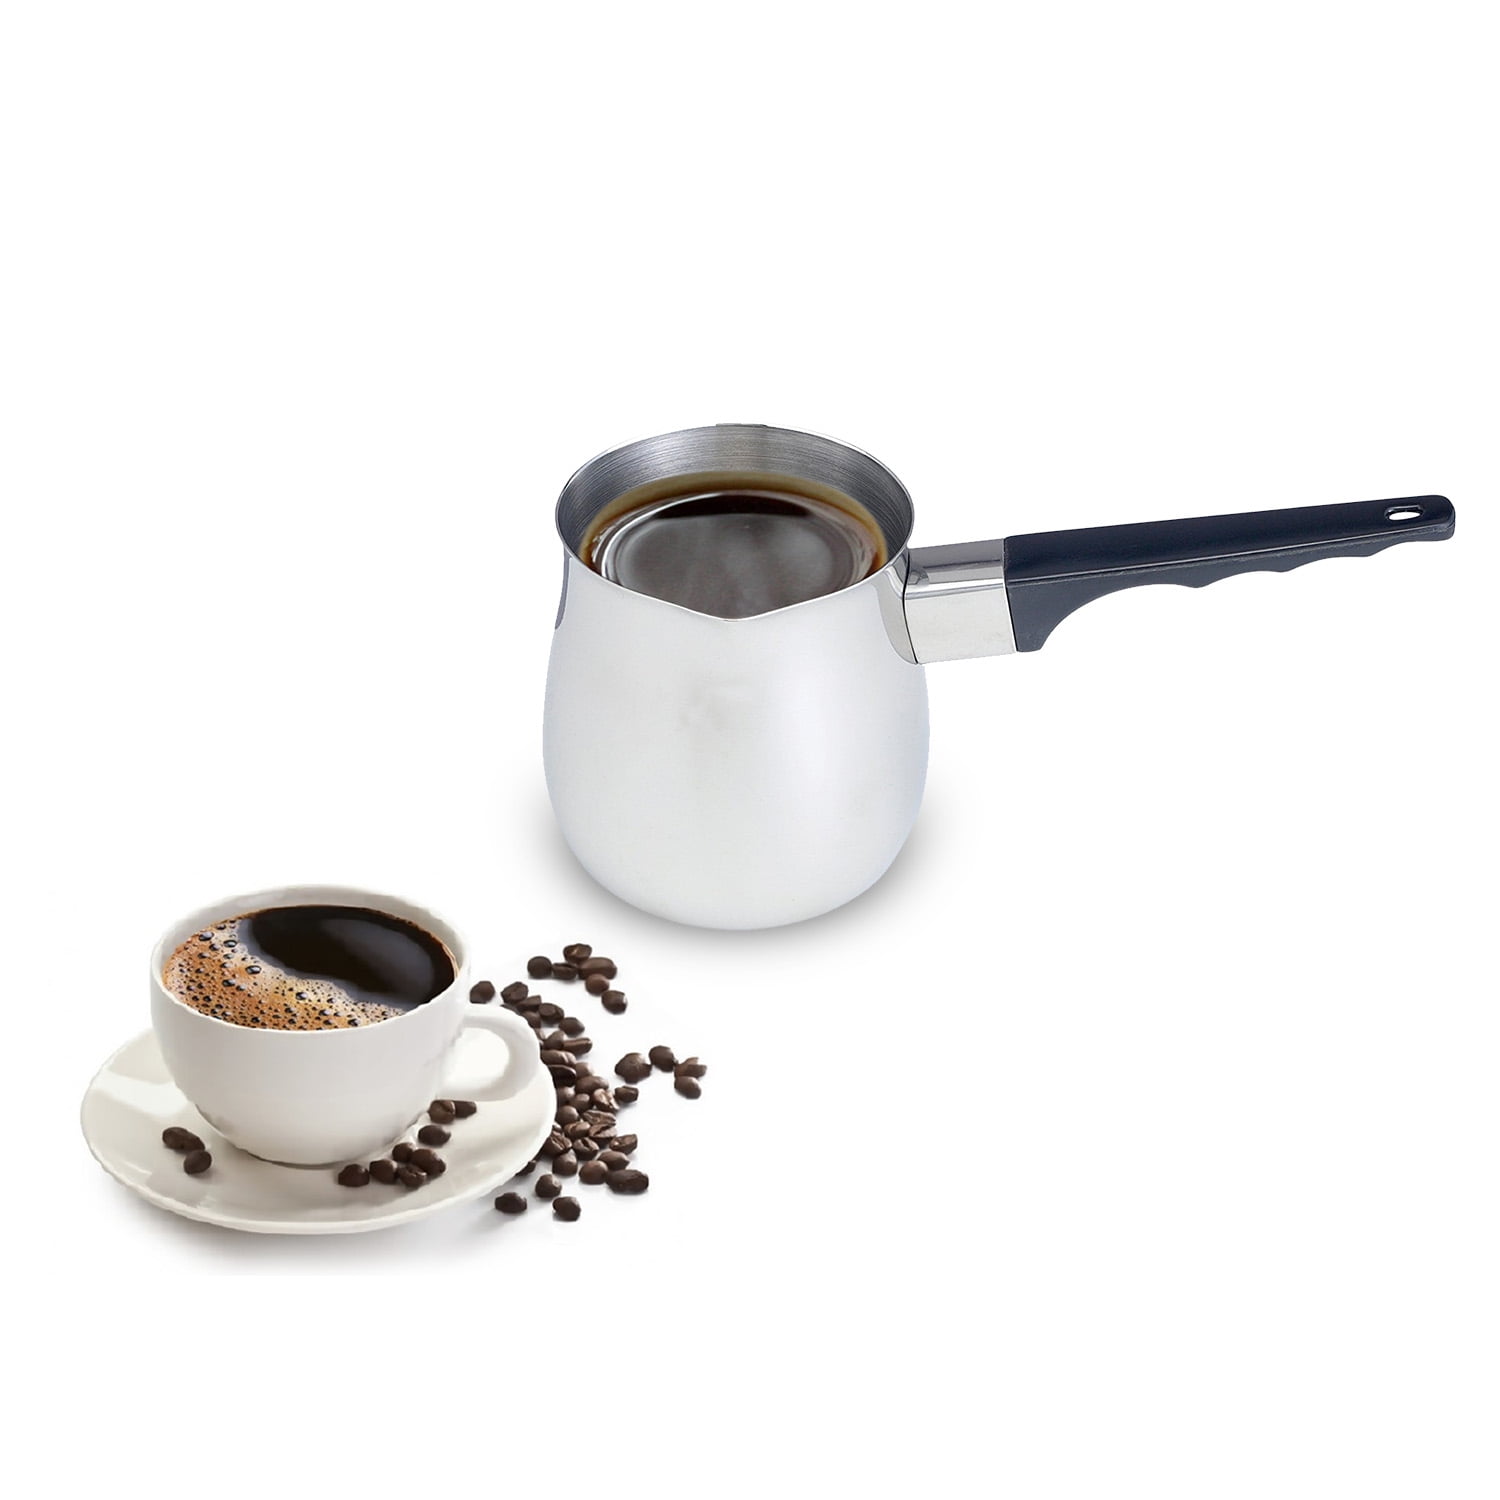 1 Stainless Steel Milk Warmer Stove Top Turkish Coffee Pot Butter